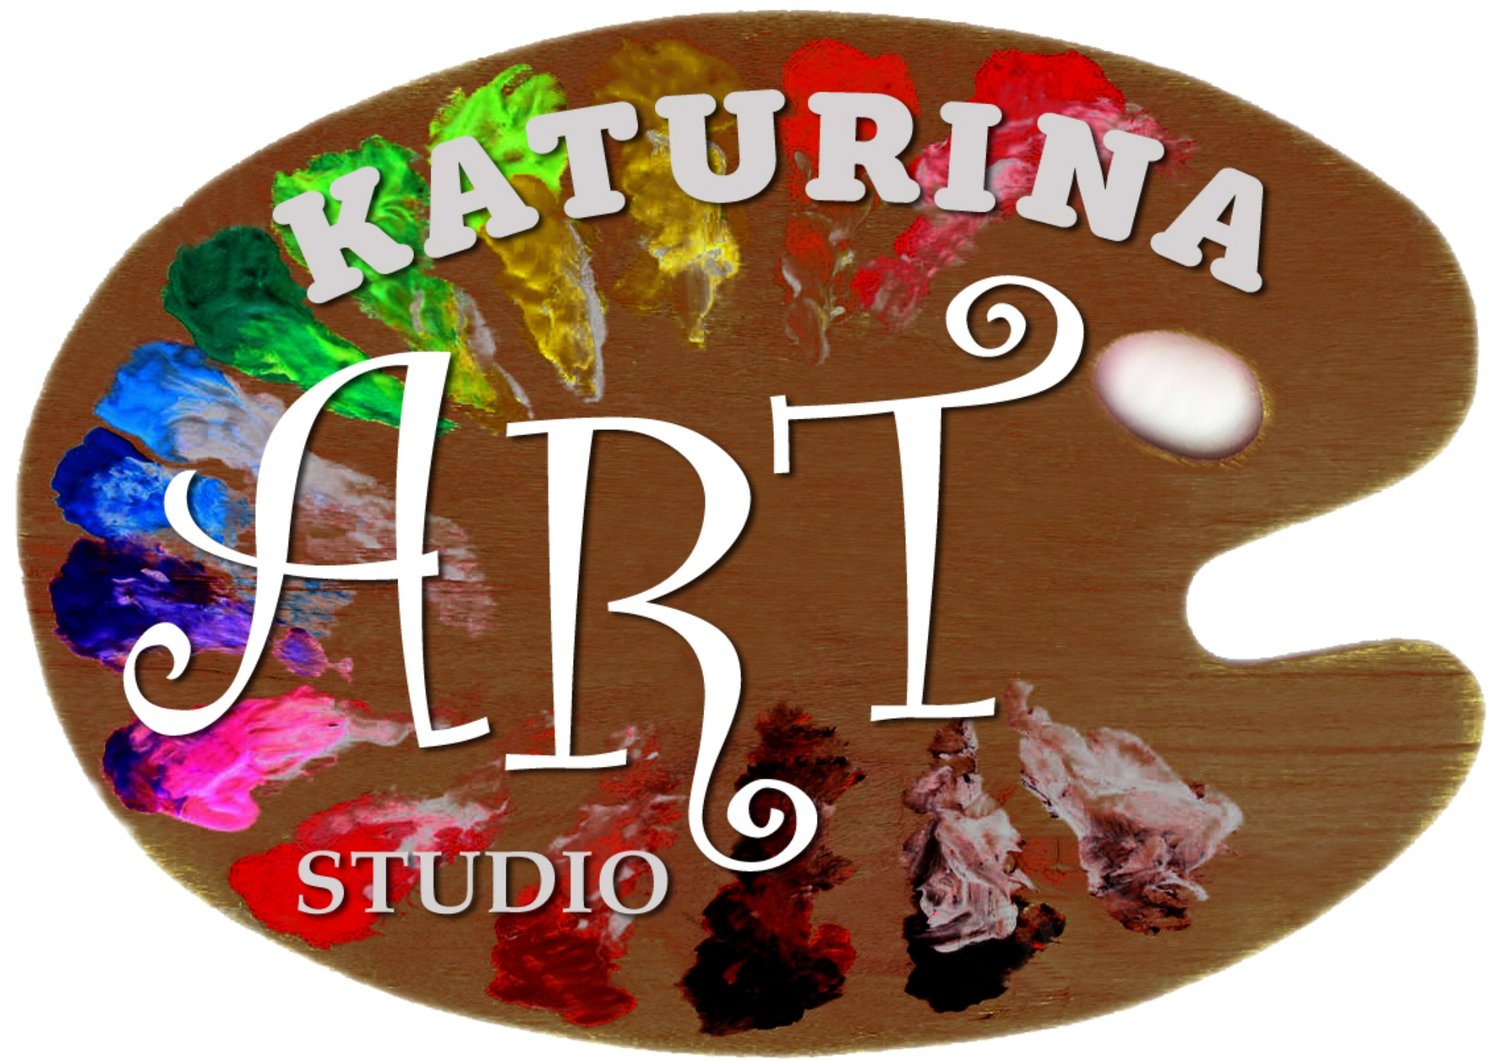 Katurina Art Studio & Design